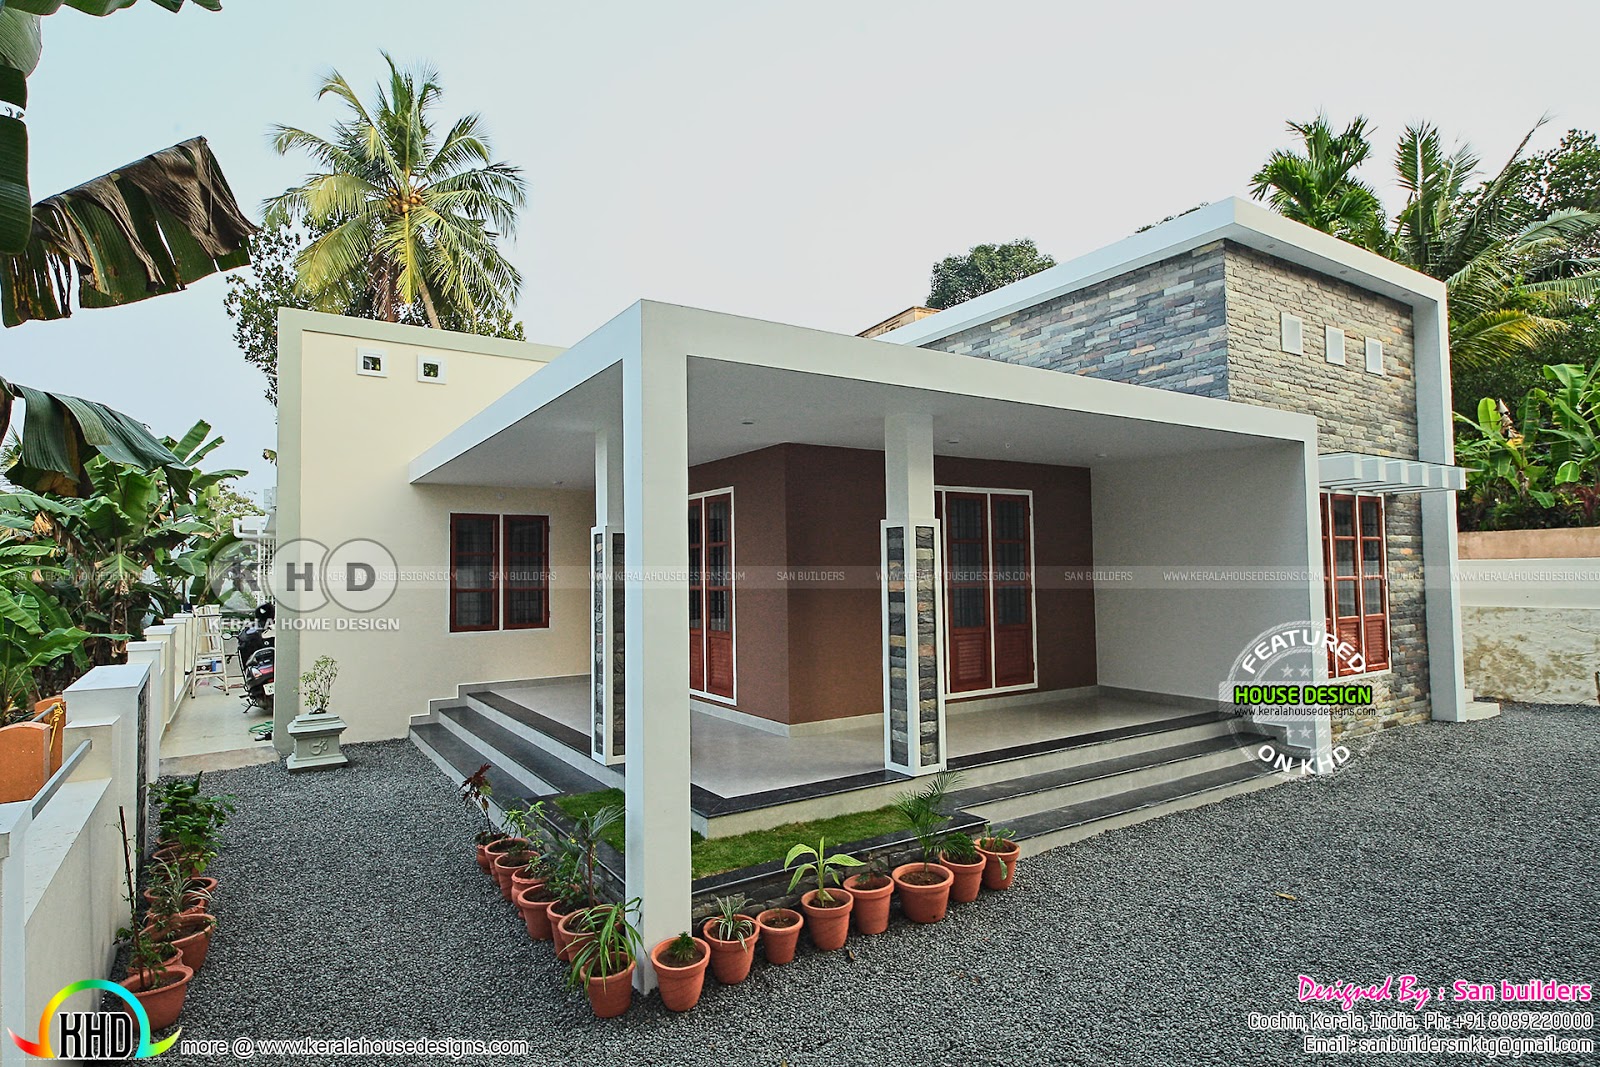 Furnished Single floor Kerala home design 1616 sq-ft - Kerala home